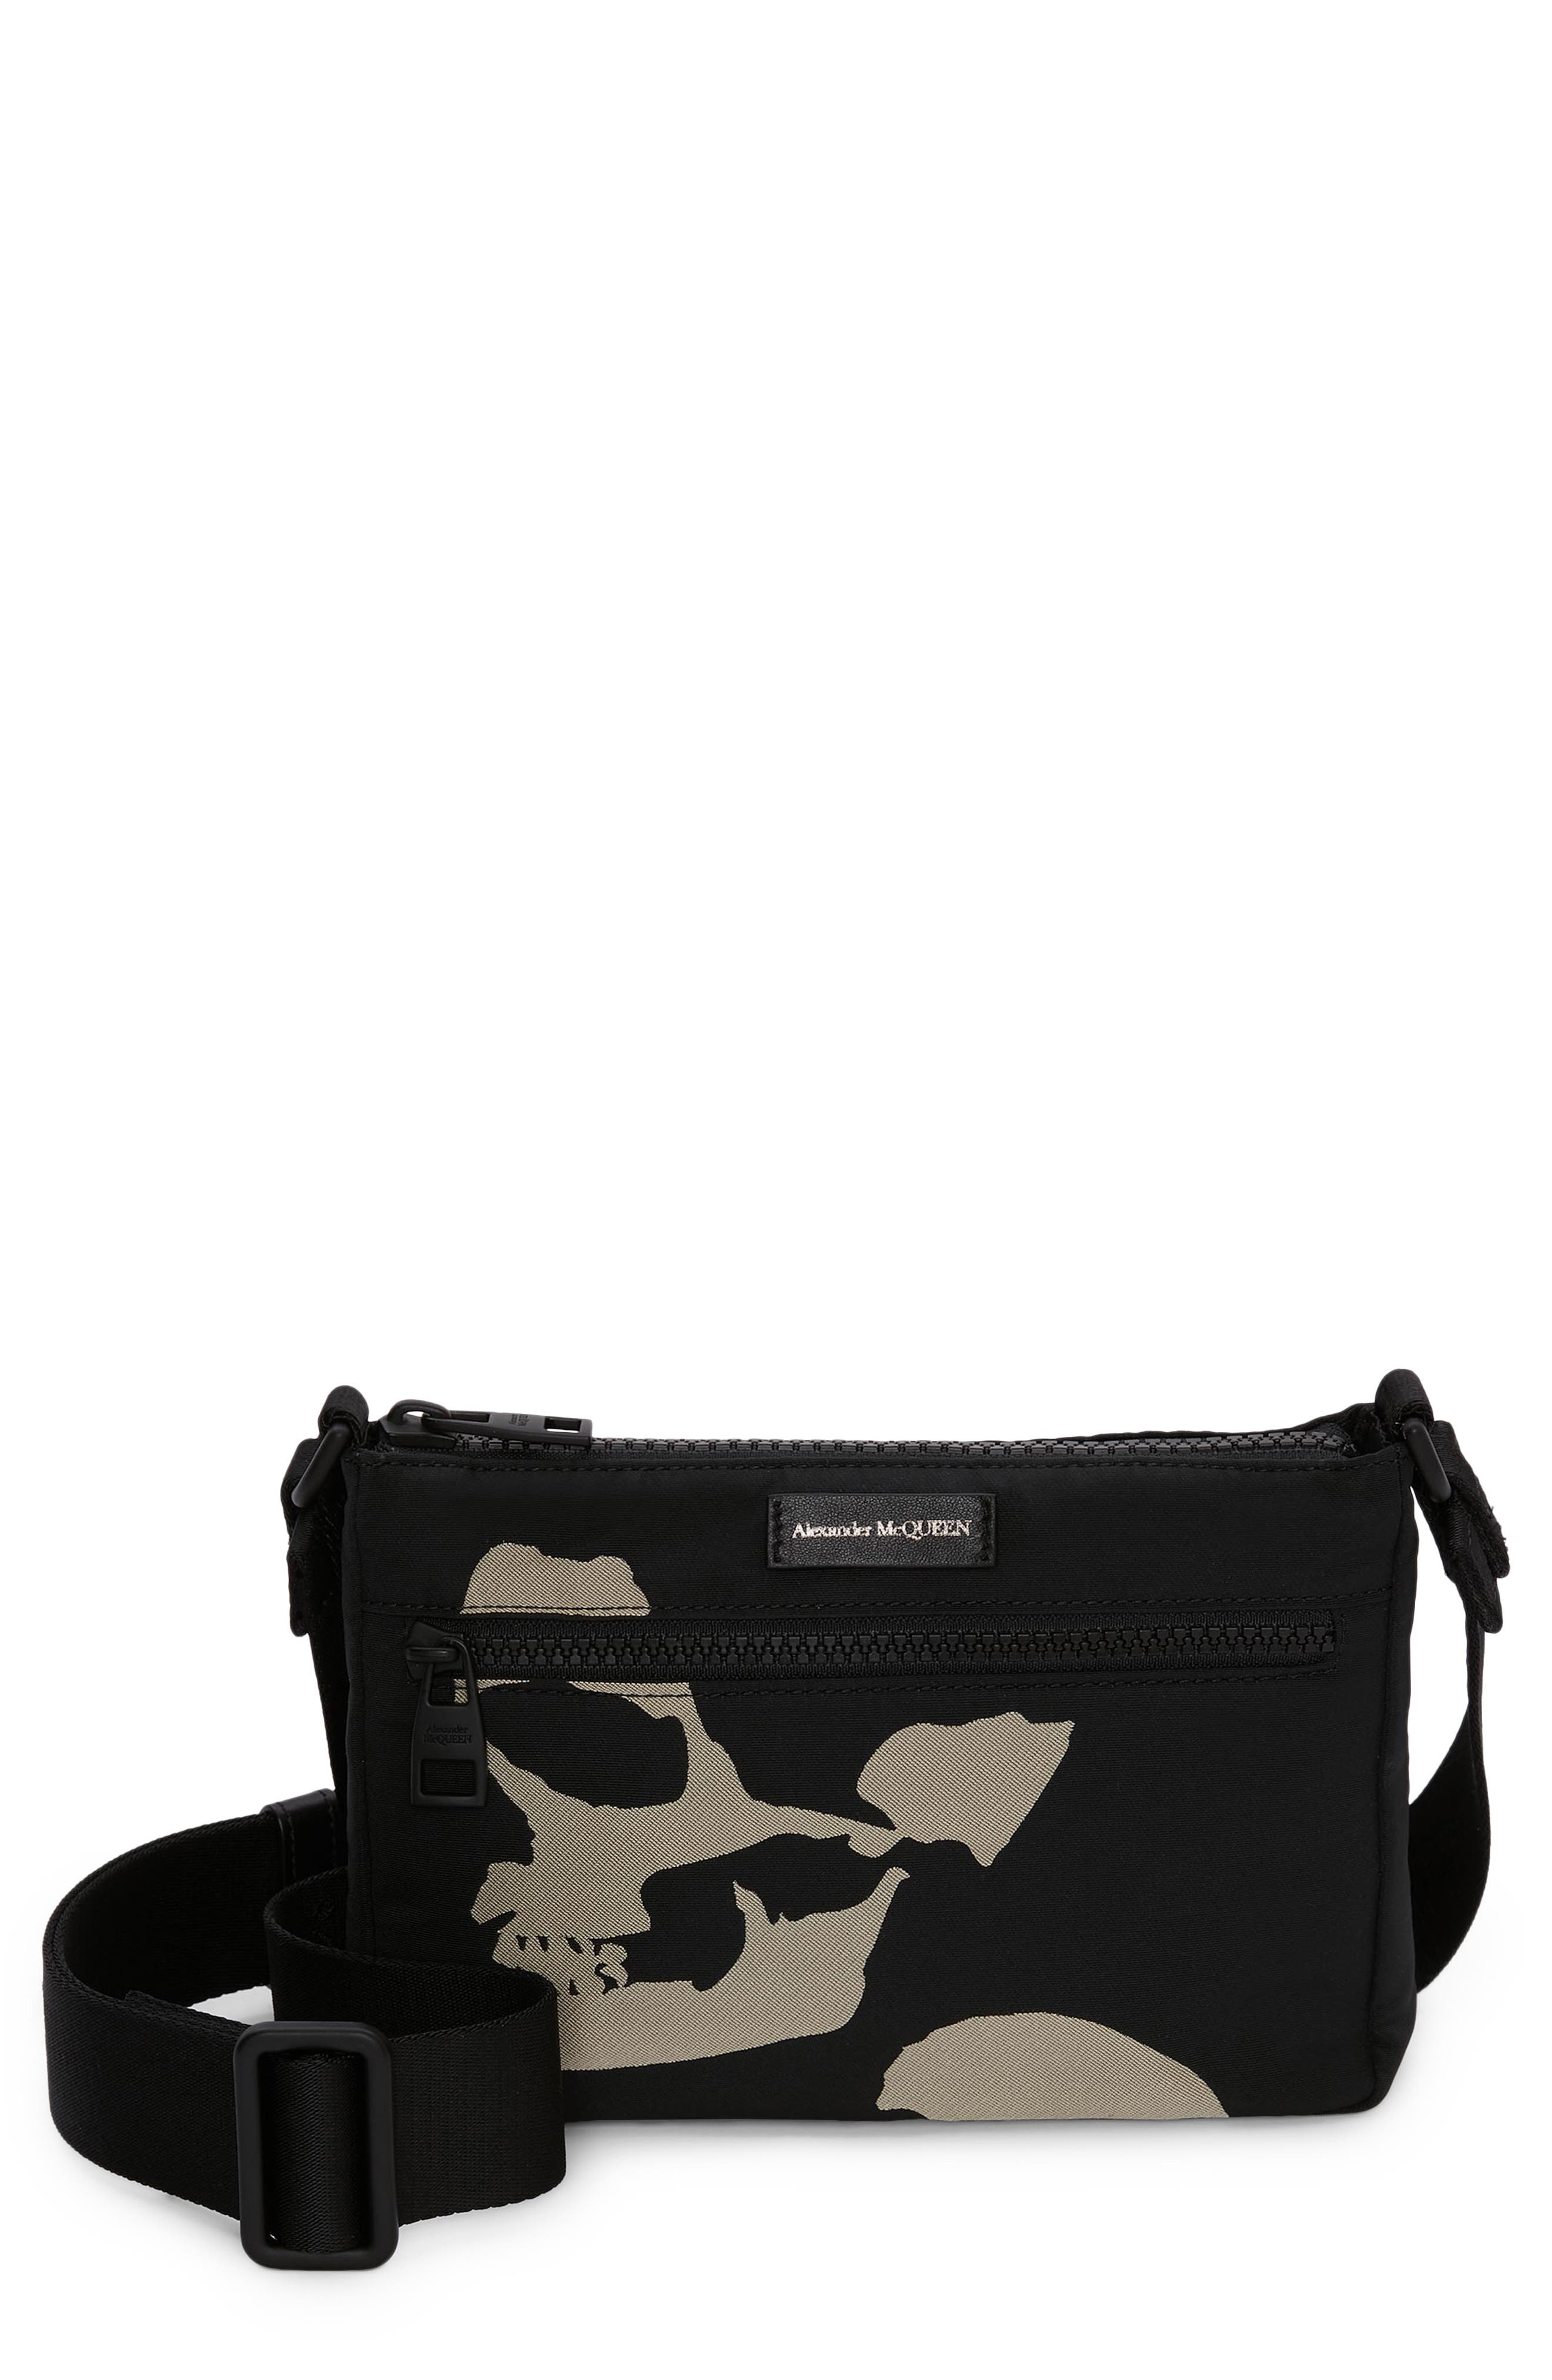 Alexander McQueen Camo Skull Phone Crossbody Bag in Black/Off White at Nordstrom